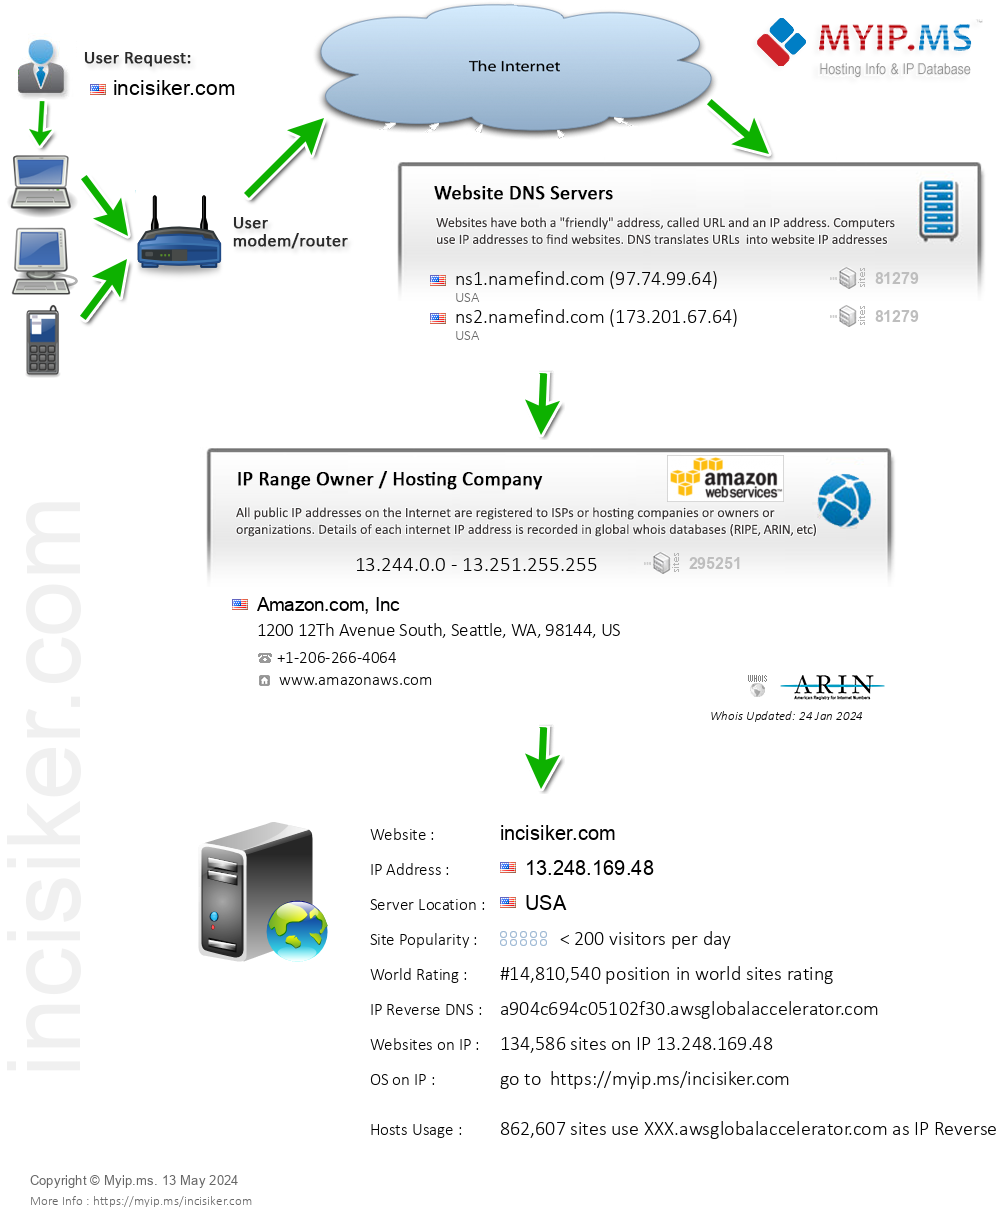 Incisiker.com - Website Hosting Visual IP Diagram